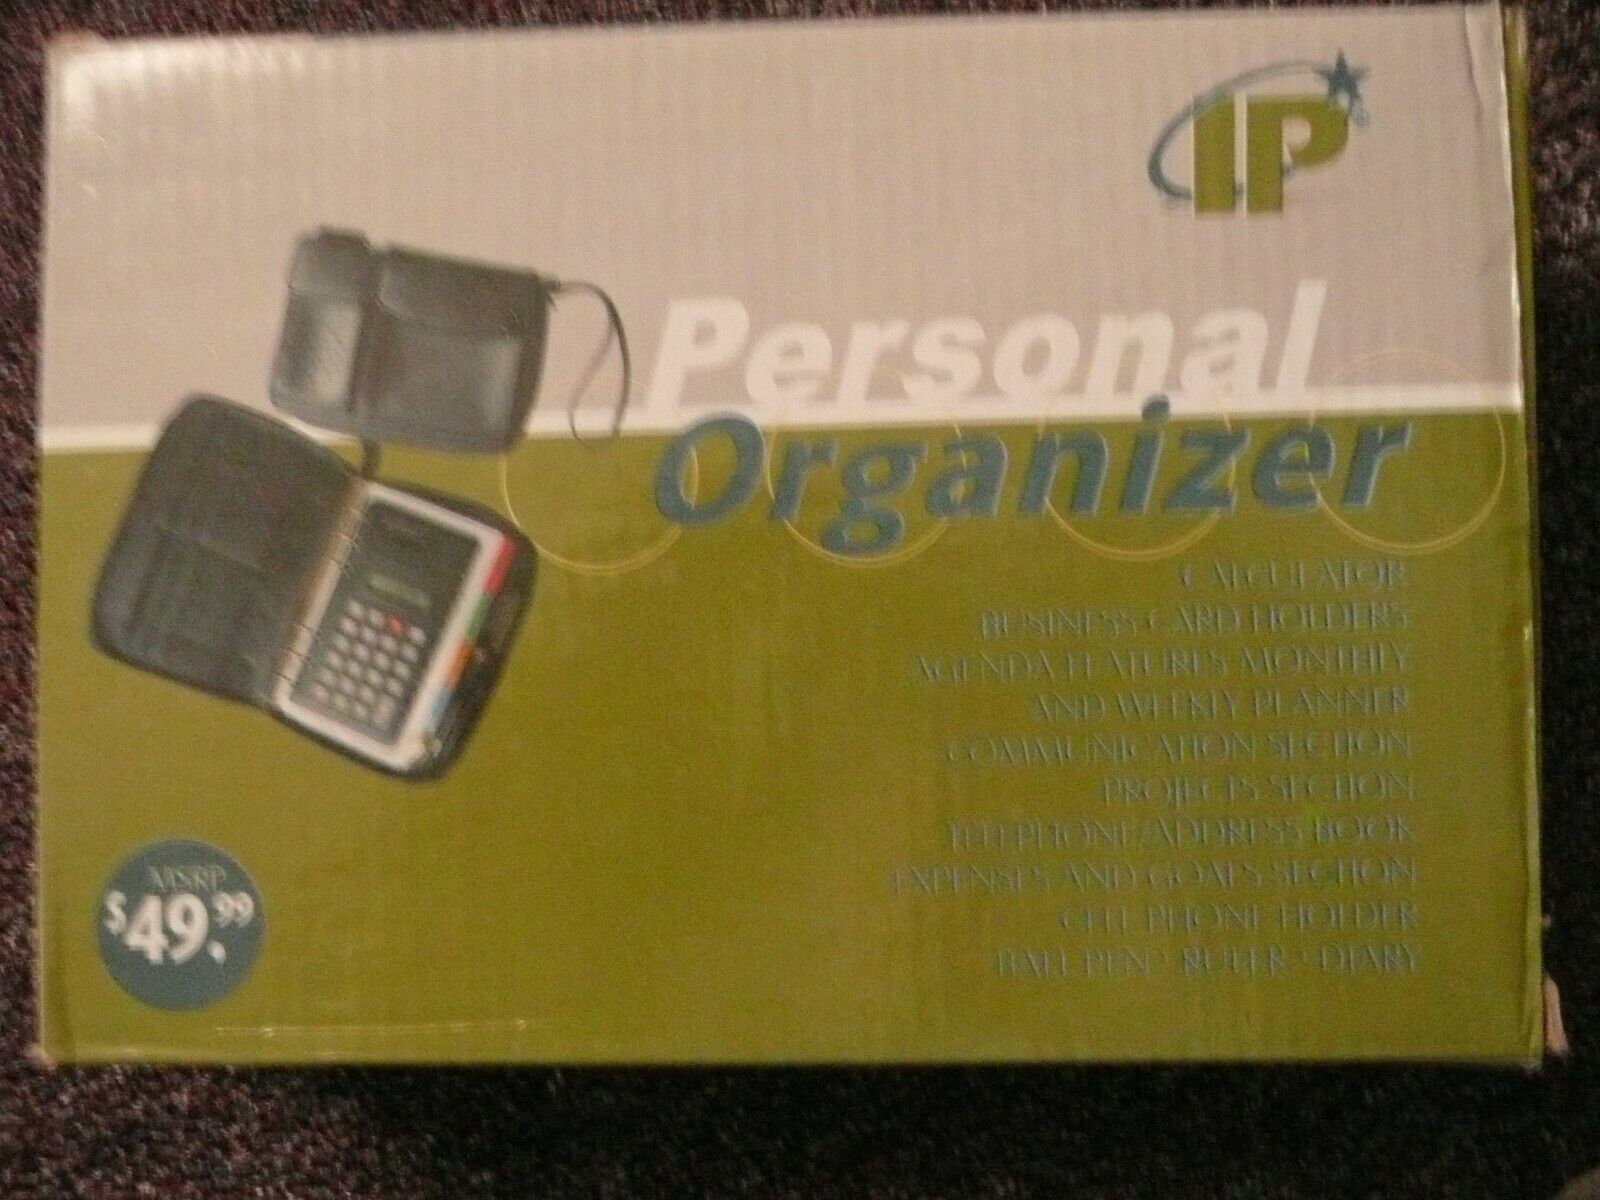 IP Personal Organizer